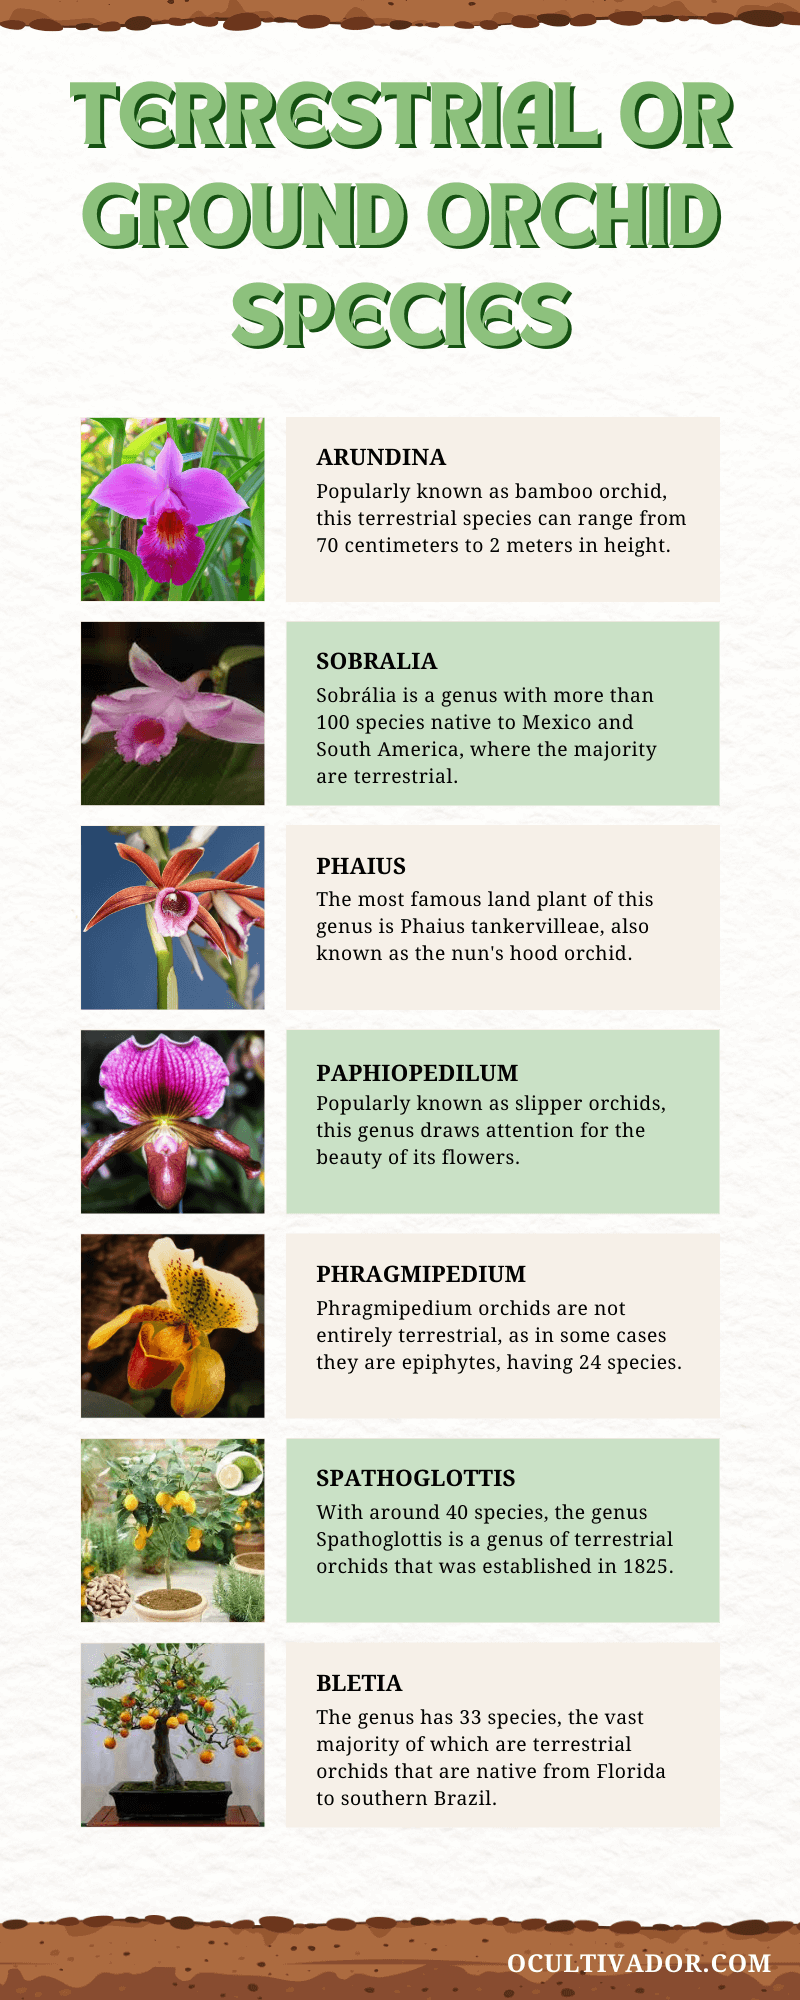 Species of ground orchids